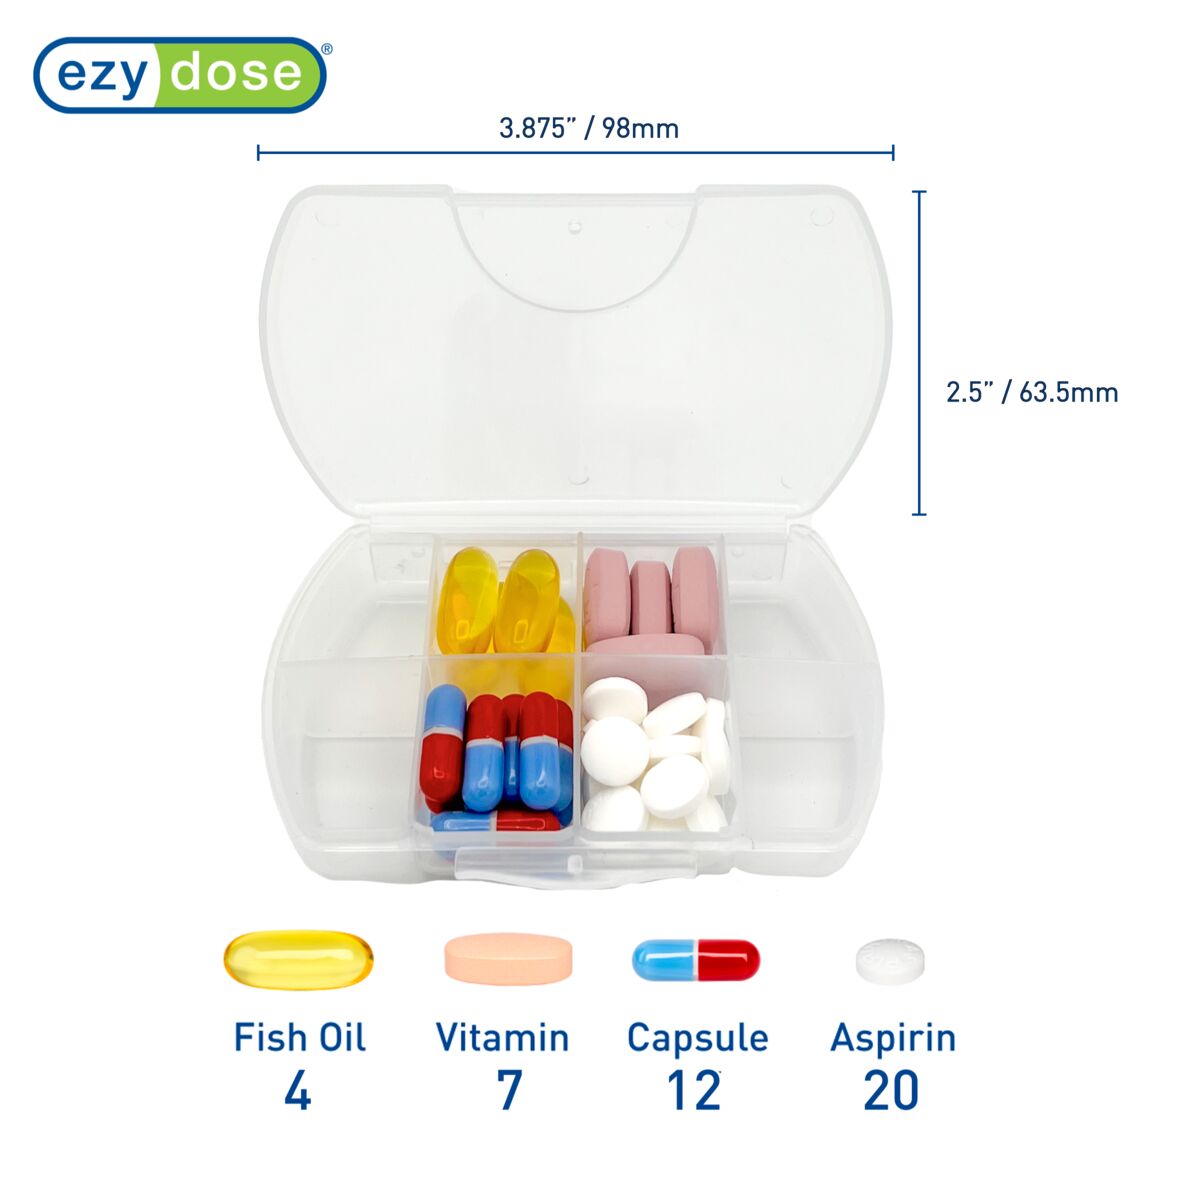 Ezy Dose® Hard Sided Pocket Pharmacy Pill Case